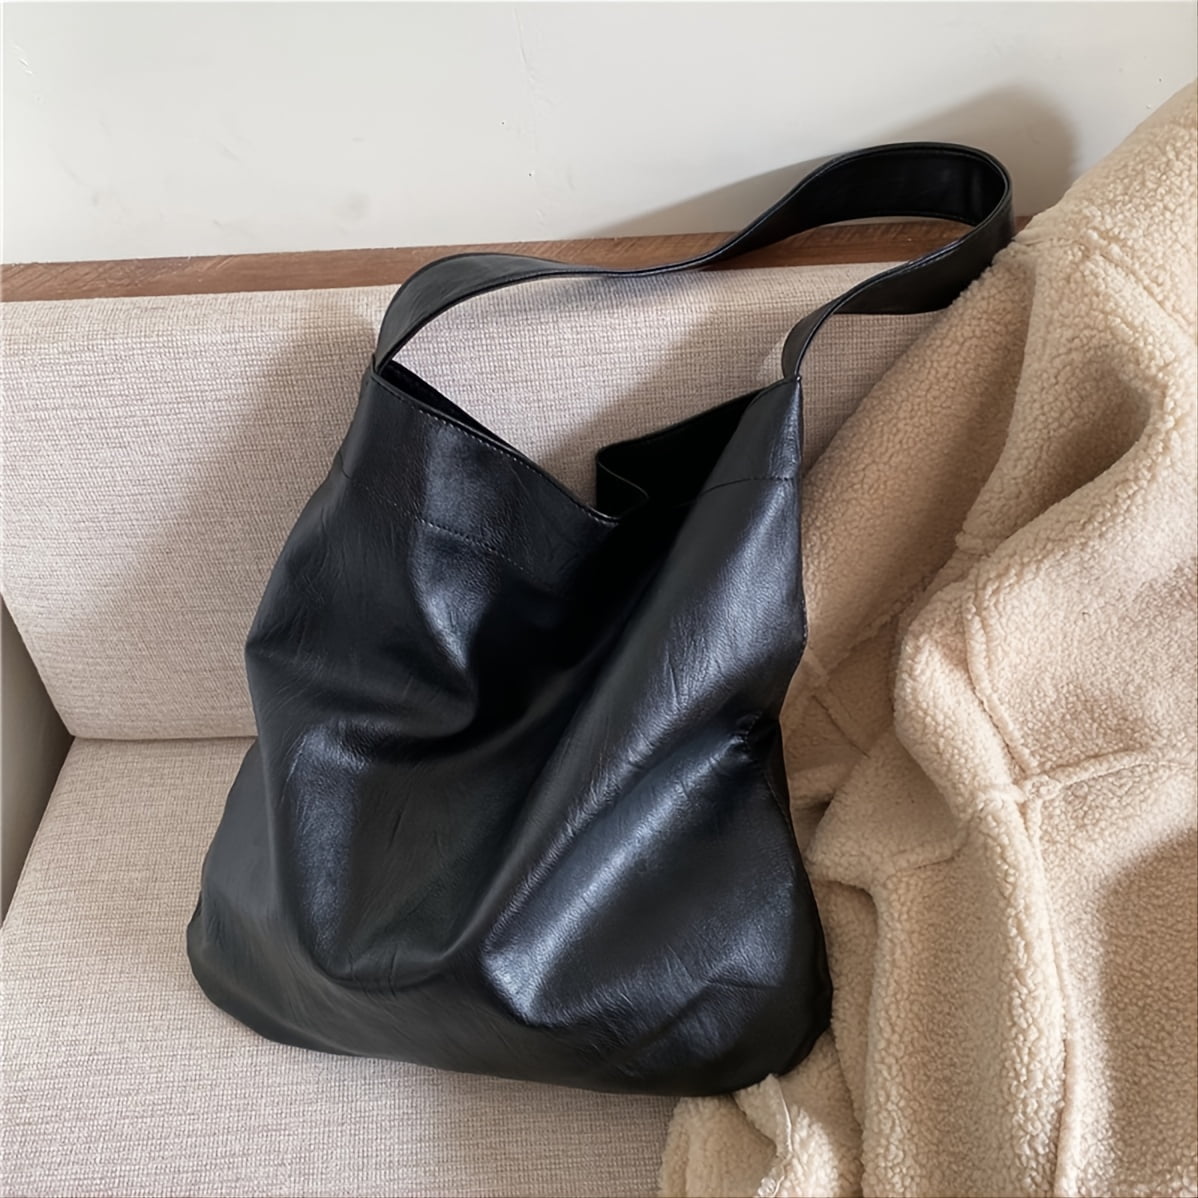 TOLEDANO large black brown leather purse with shoulder strap | eBay